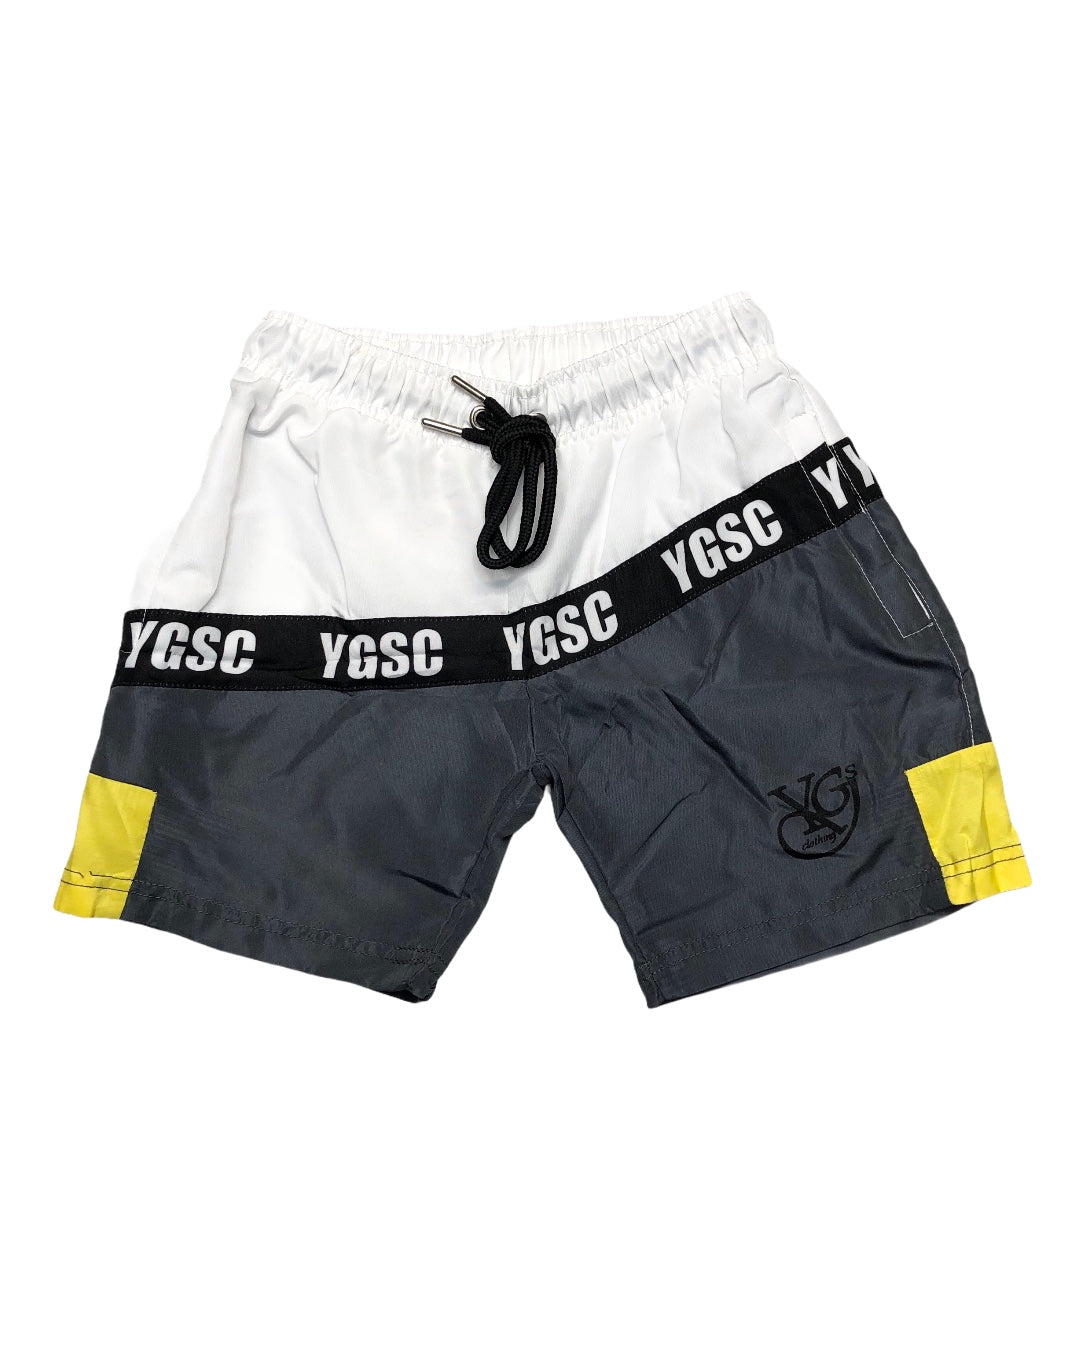 Boys YGSC (Repeat Print) dri fit shorts